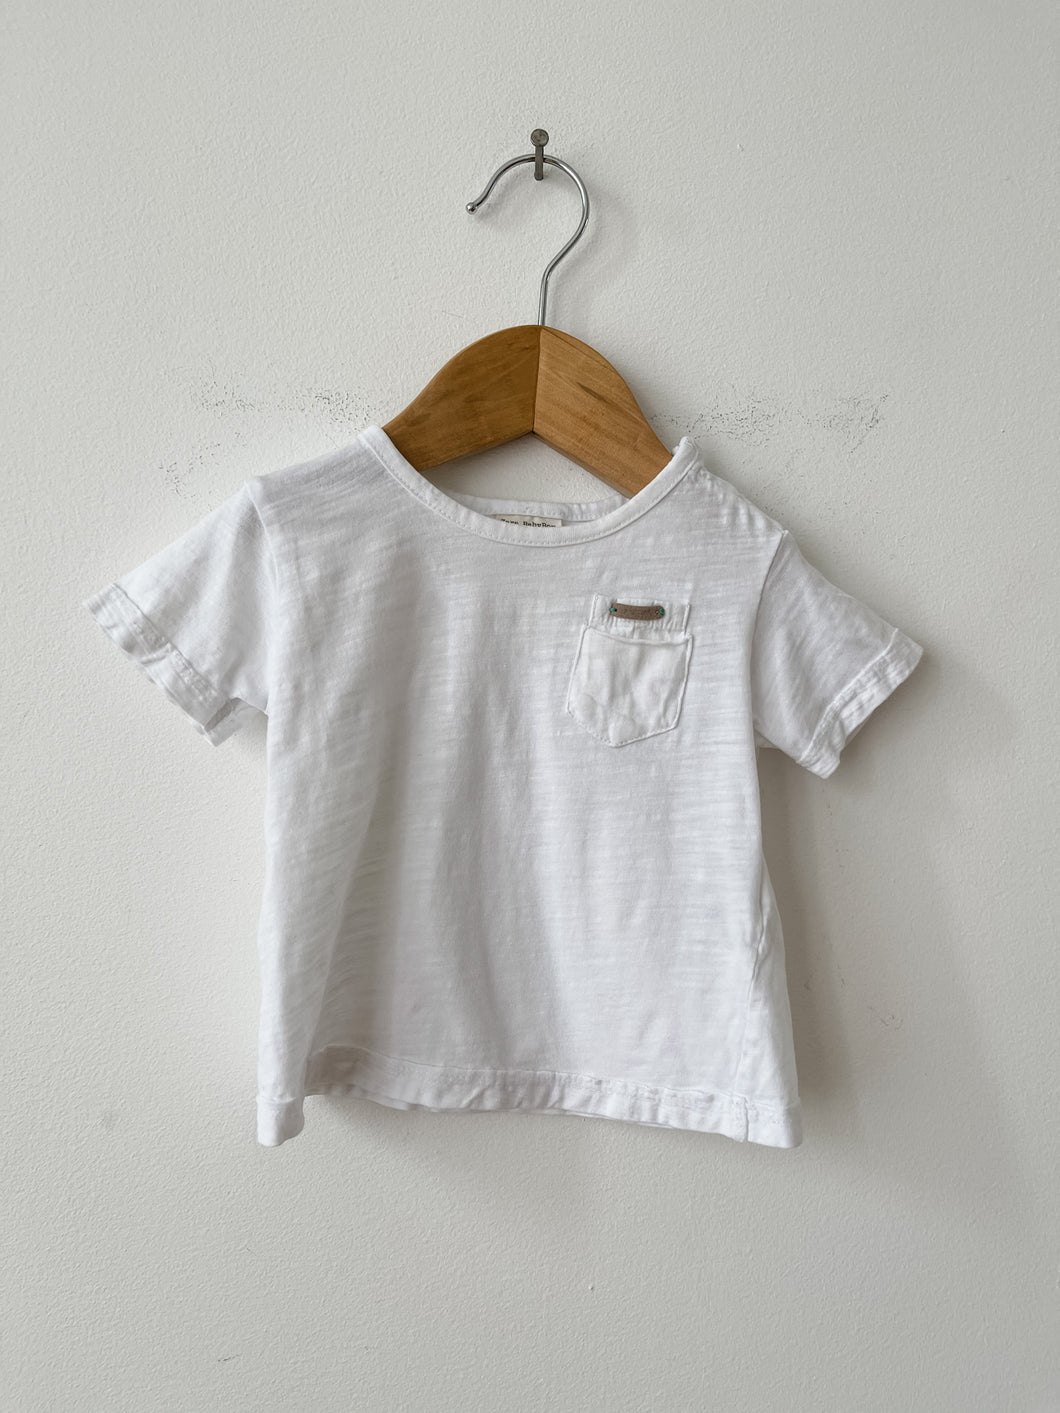 Kids White Zara Shirt Size 3-6 Months